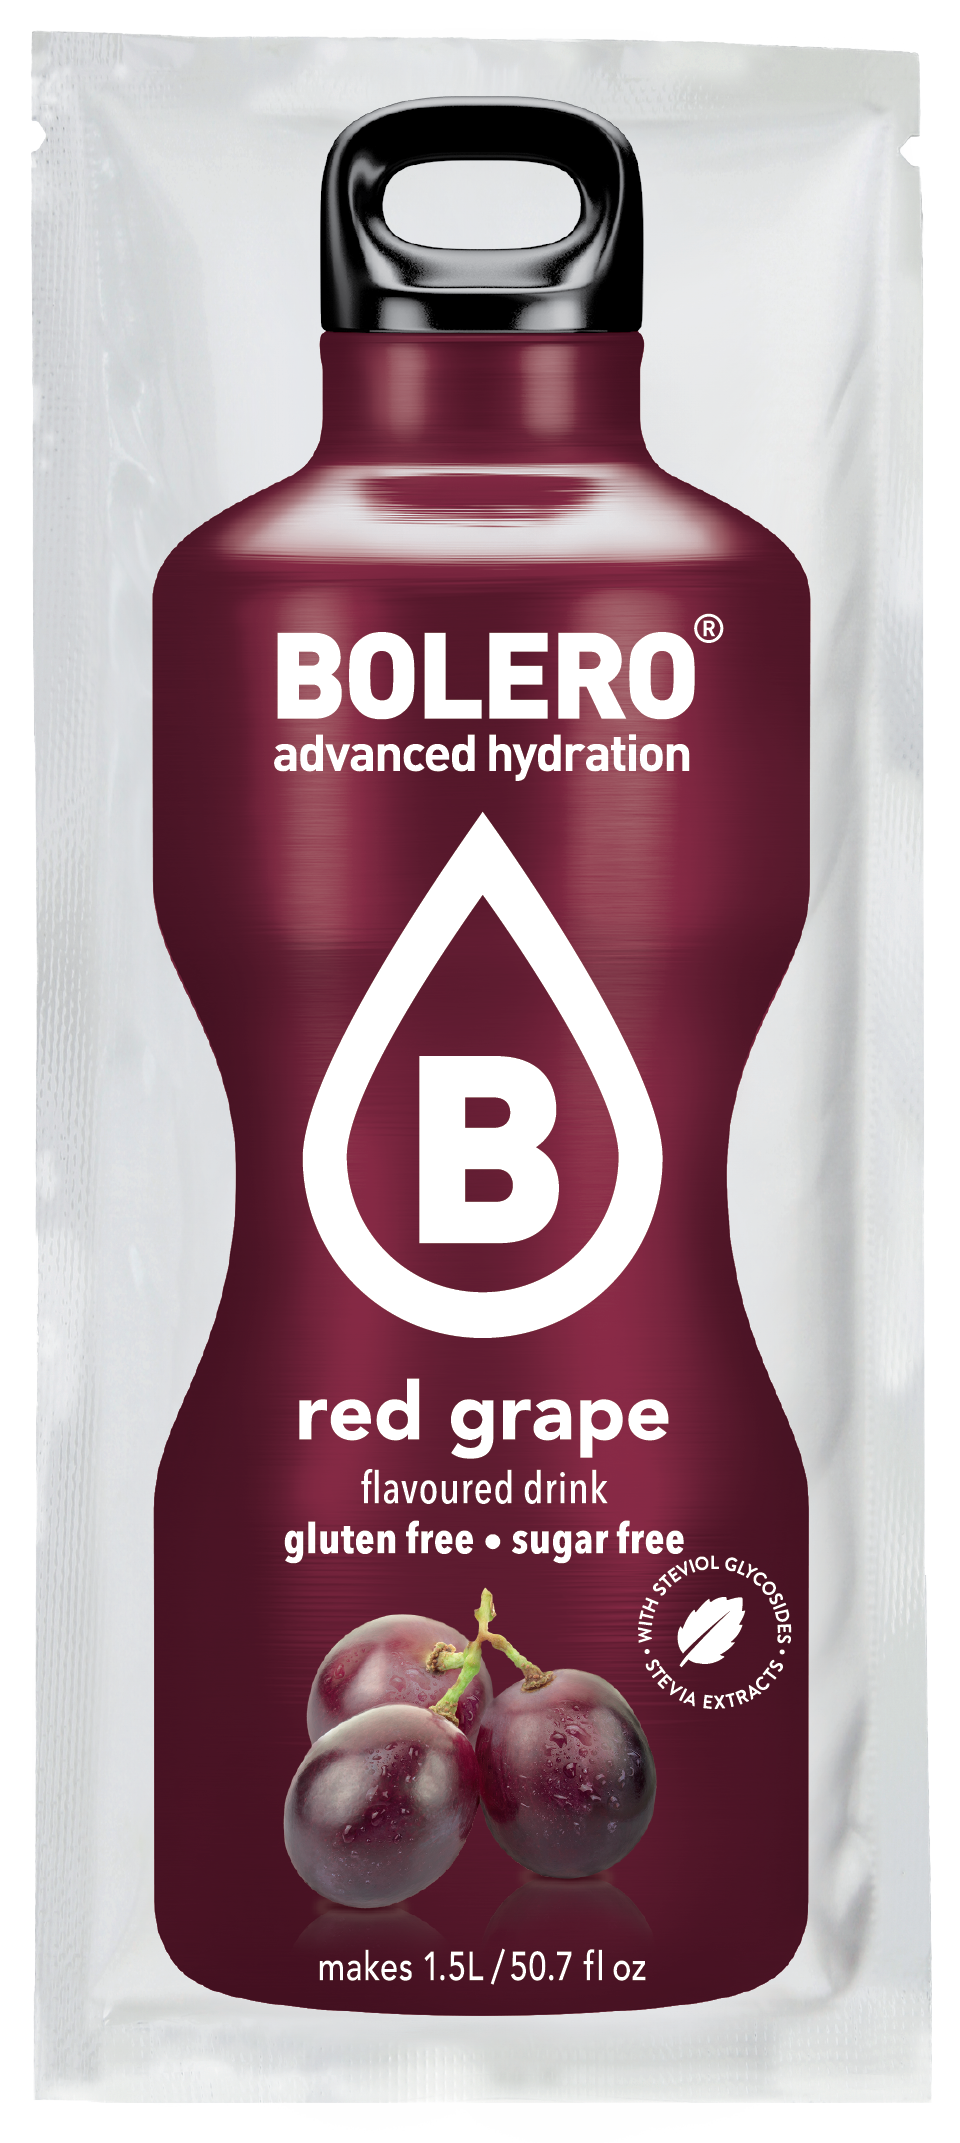 Bolero Advanced Hydration - Red Grape - Single Sachet